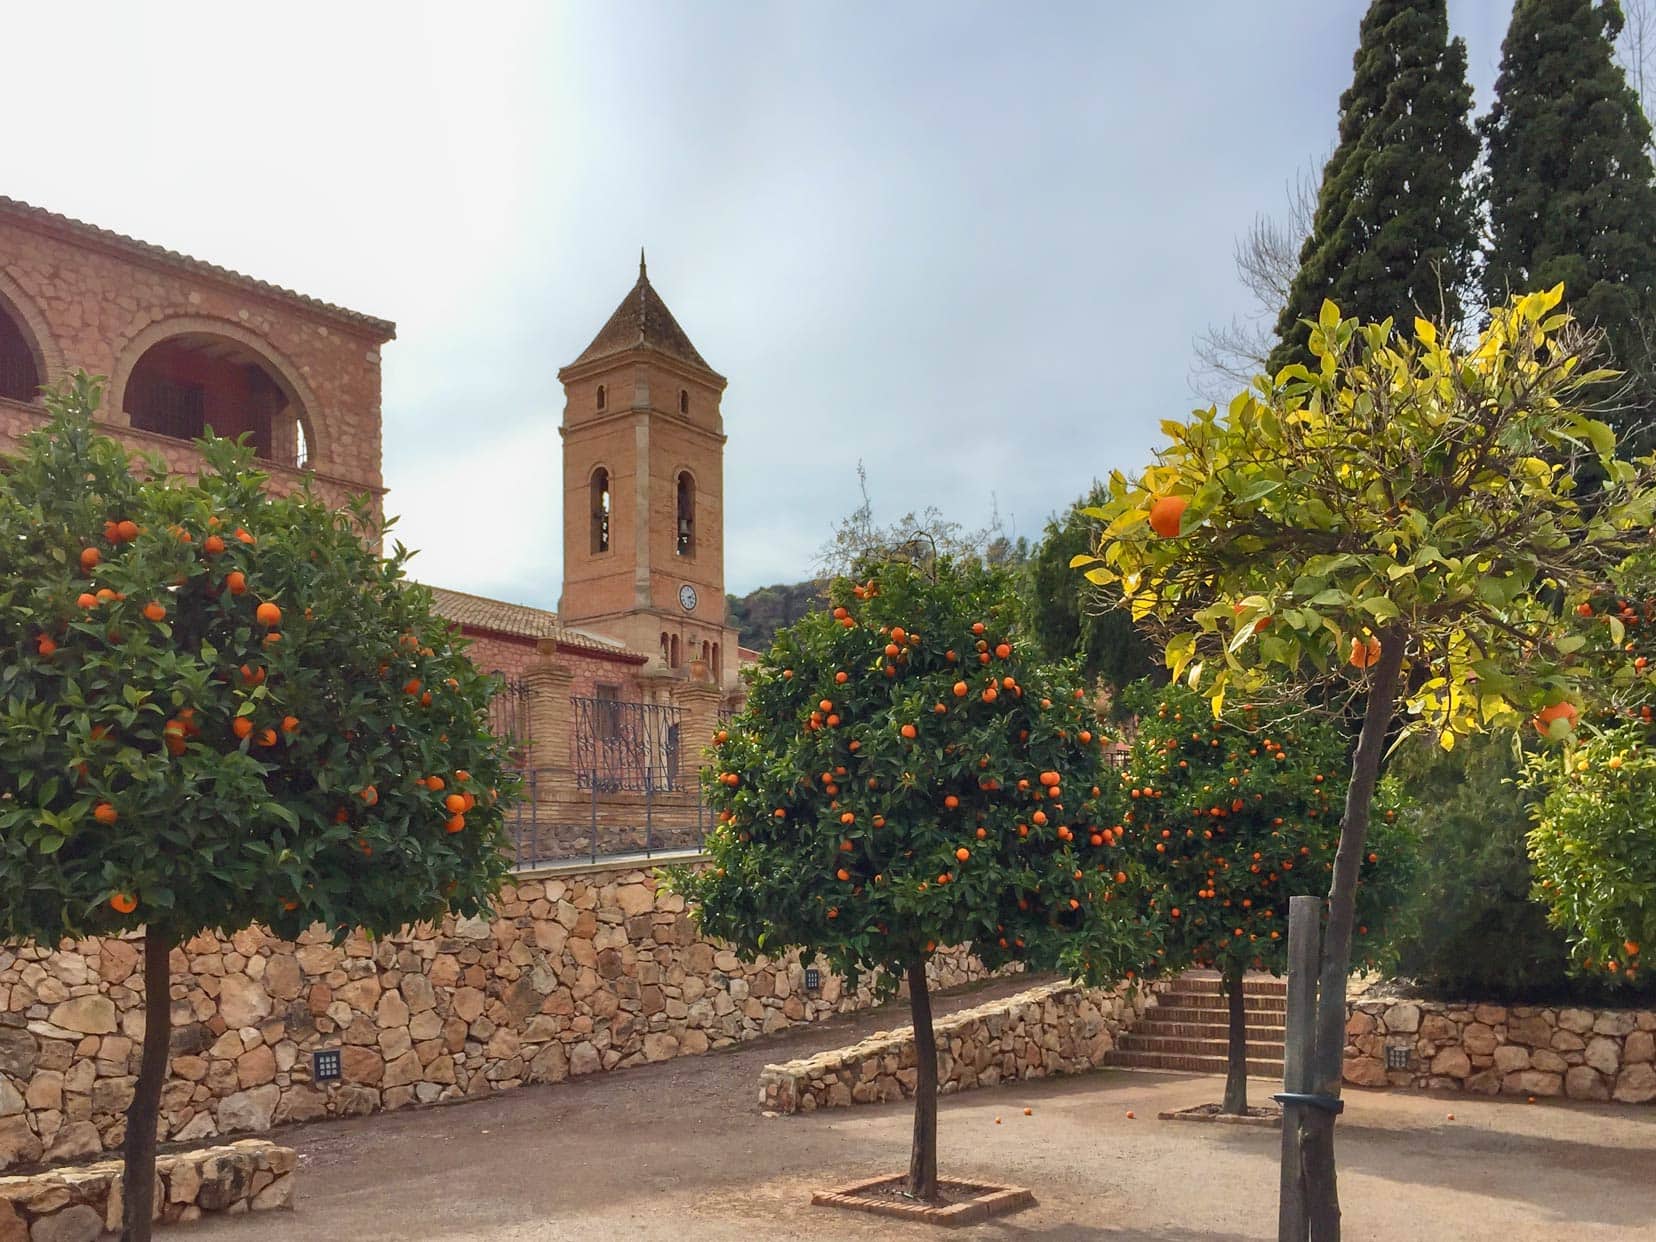 Santa-Eulalia-de-Merida-Sanctuary-oranges